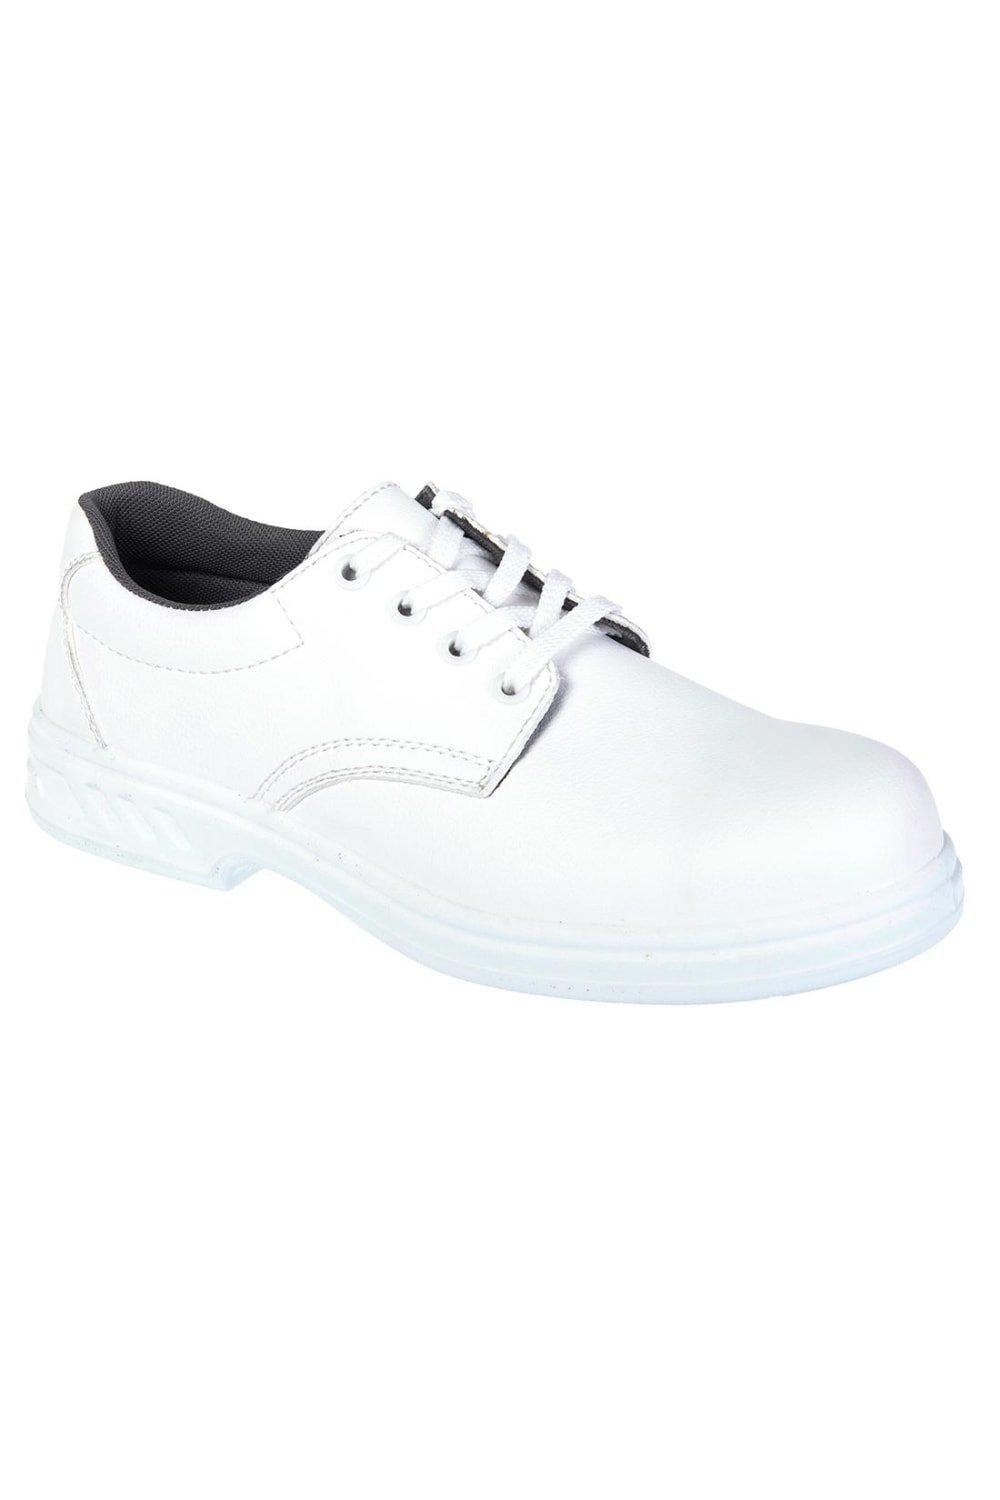 Защитная обувь Steelite Portwest, белый